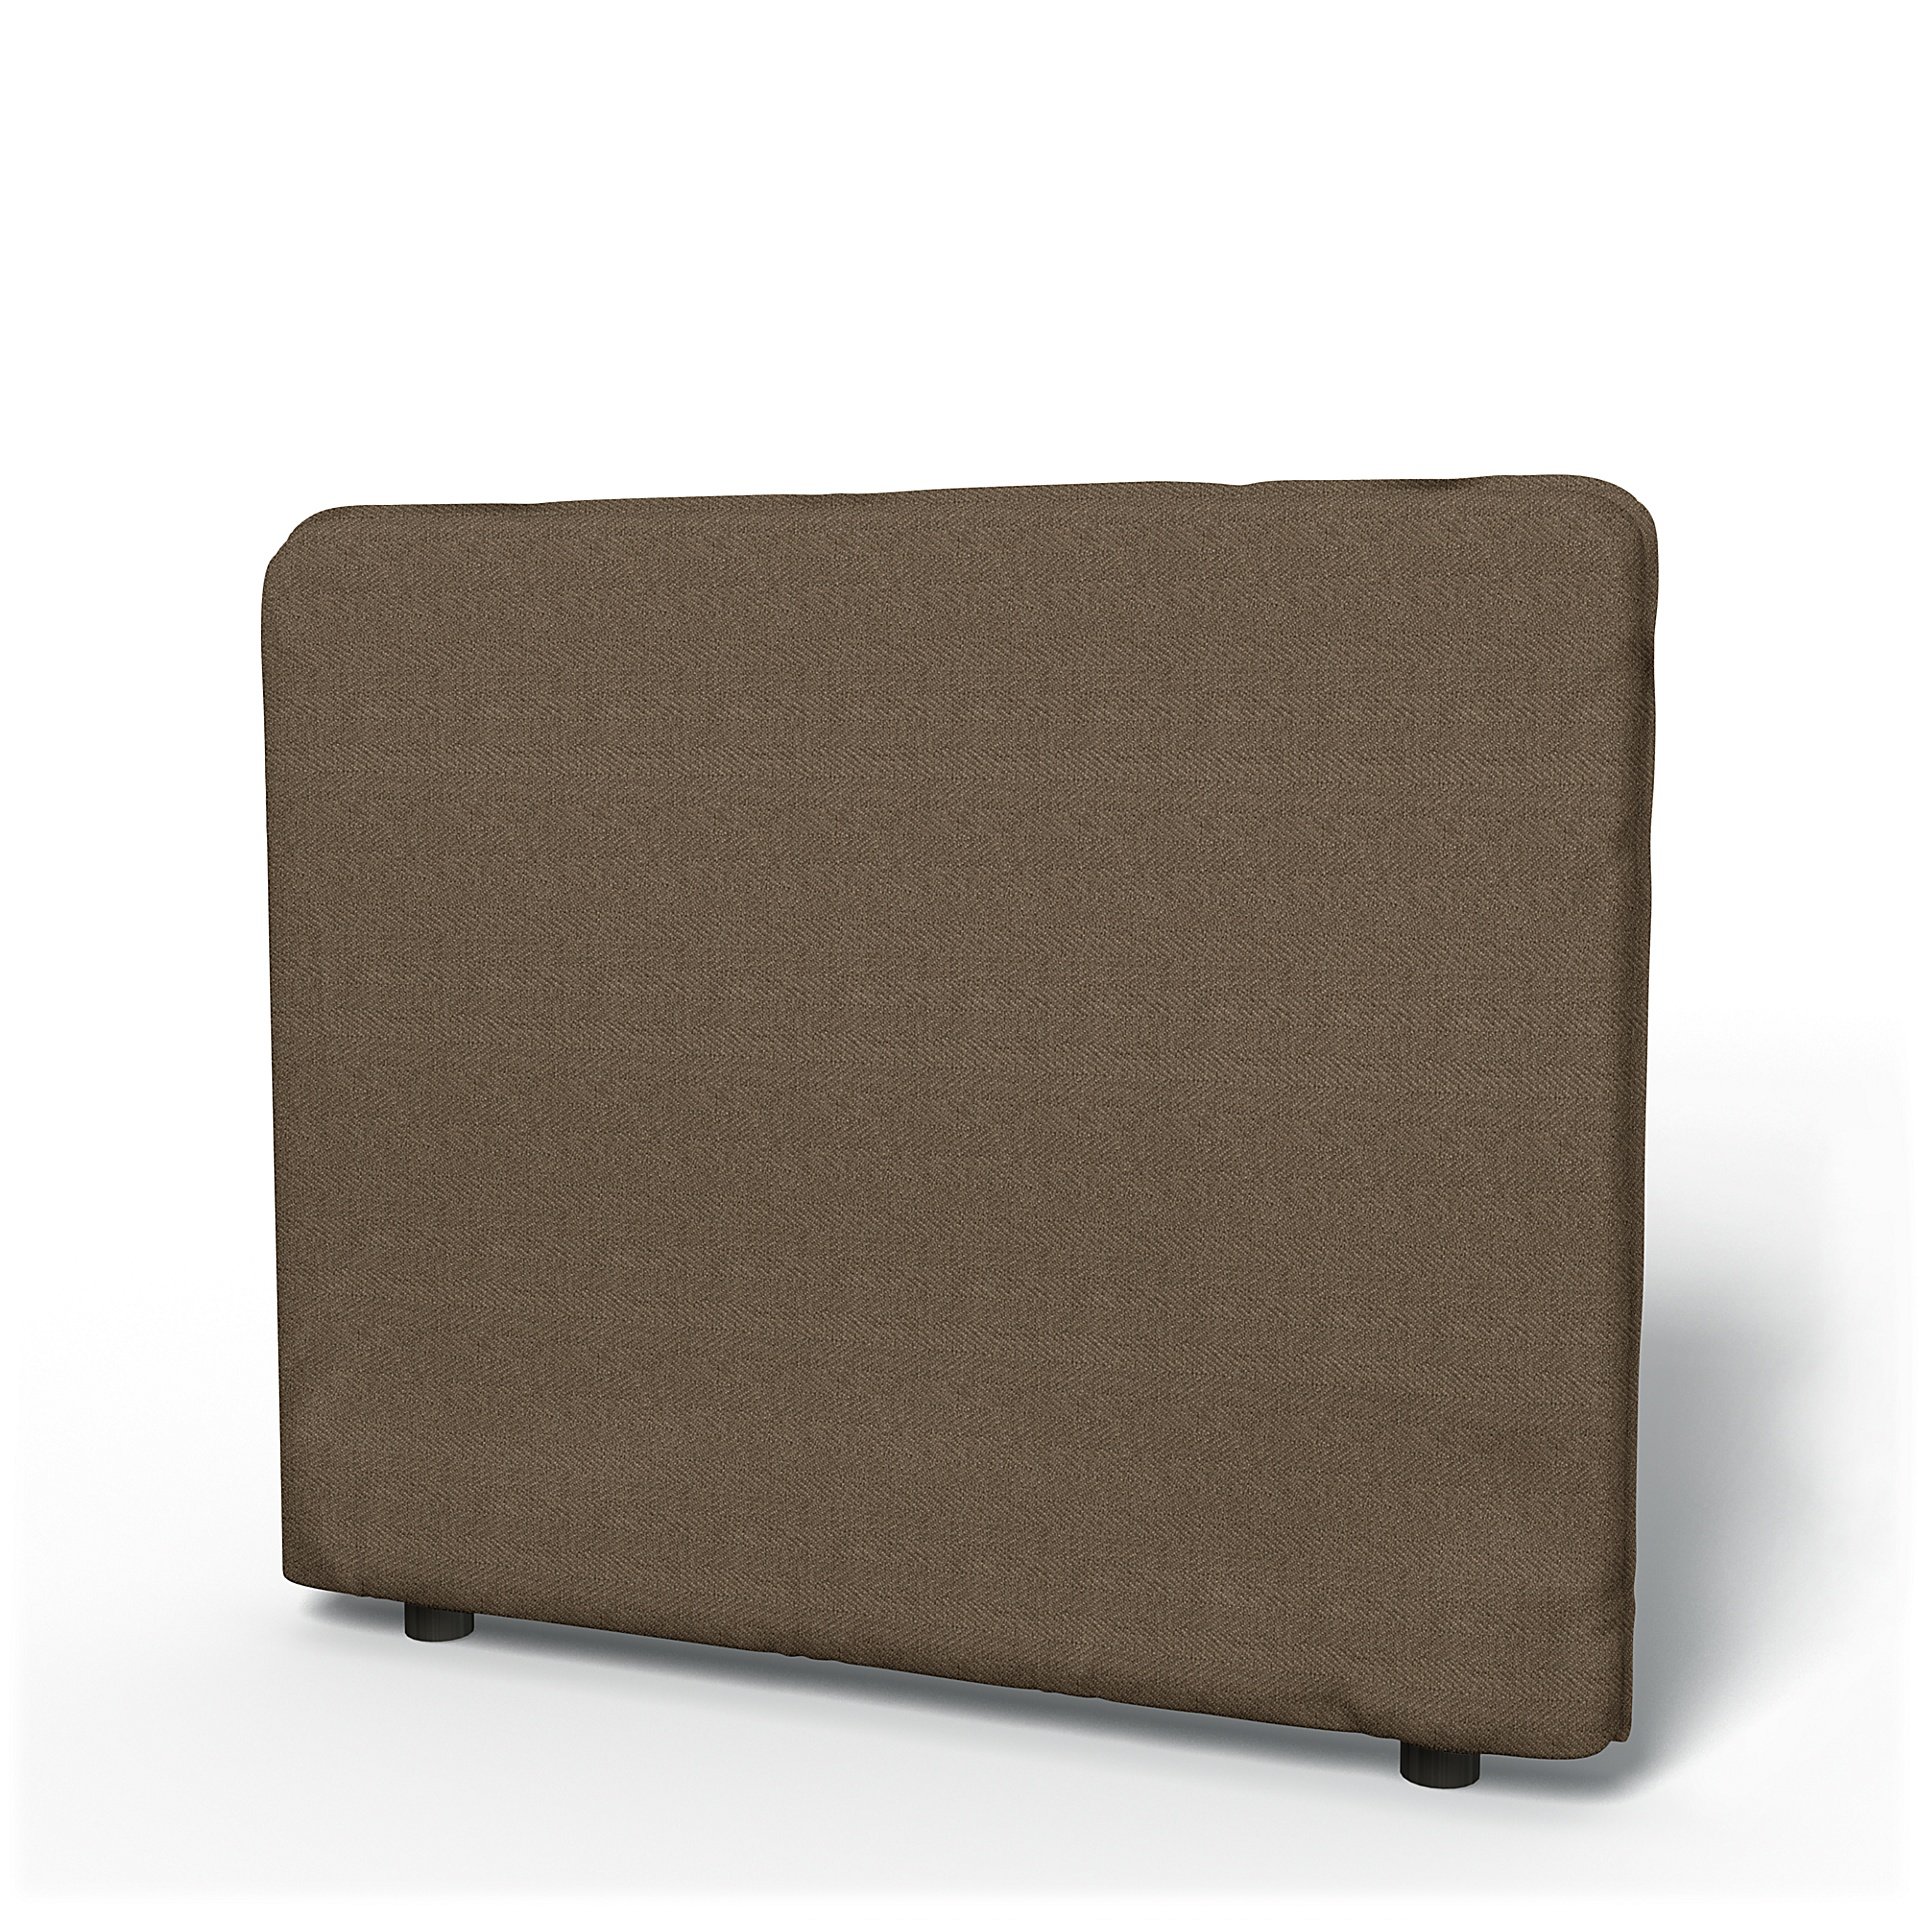 IKEA - Vallentuna Low Backrest Cover 100x80cm 39x32in, Dark Taupe, Boucle & Texture - Bemz